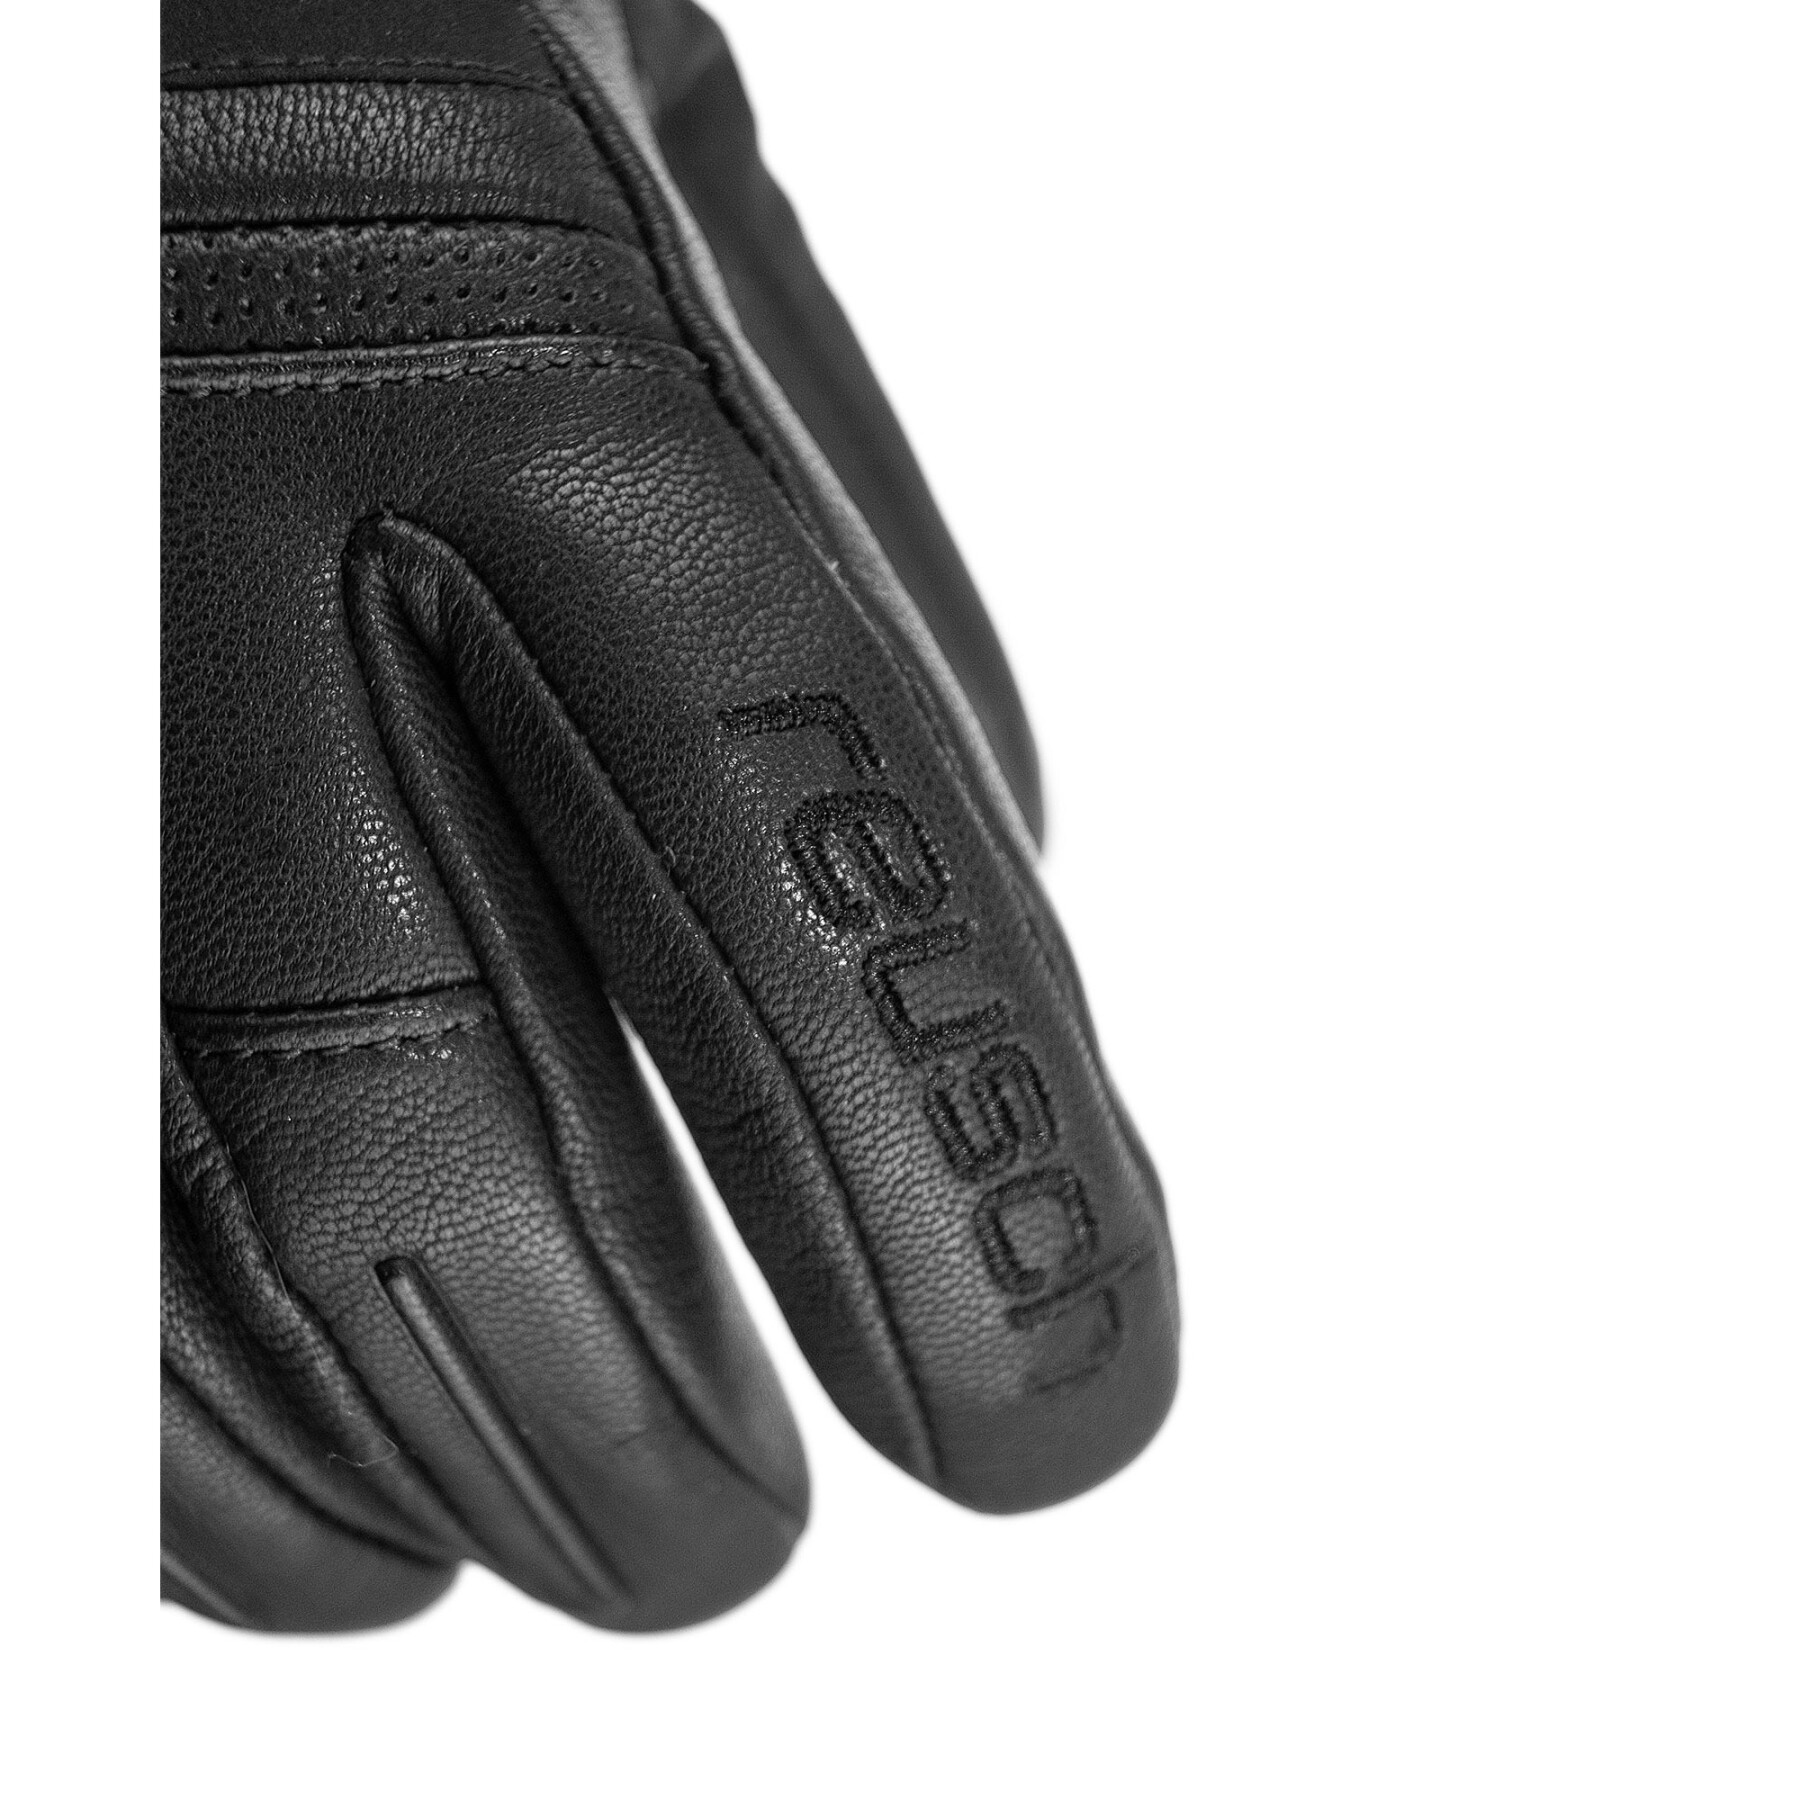 Ski gloves Reusch Megan R-TEX® XT